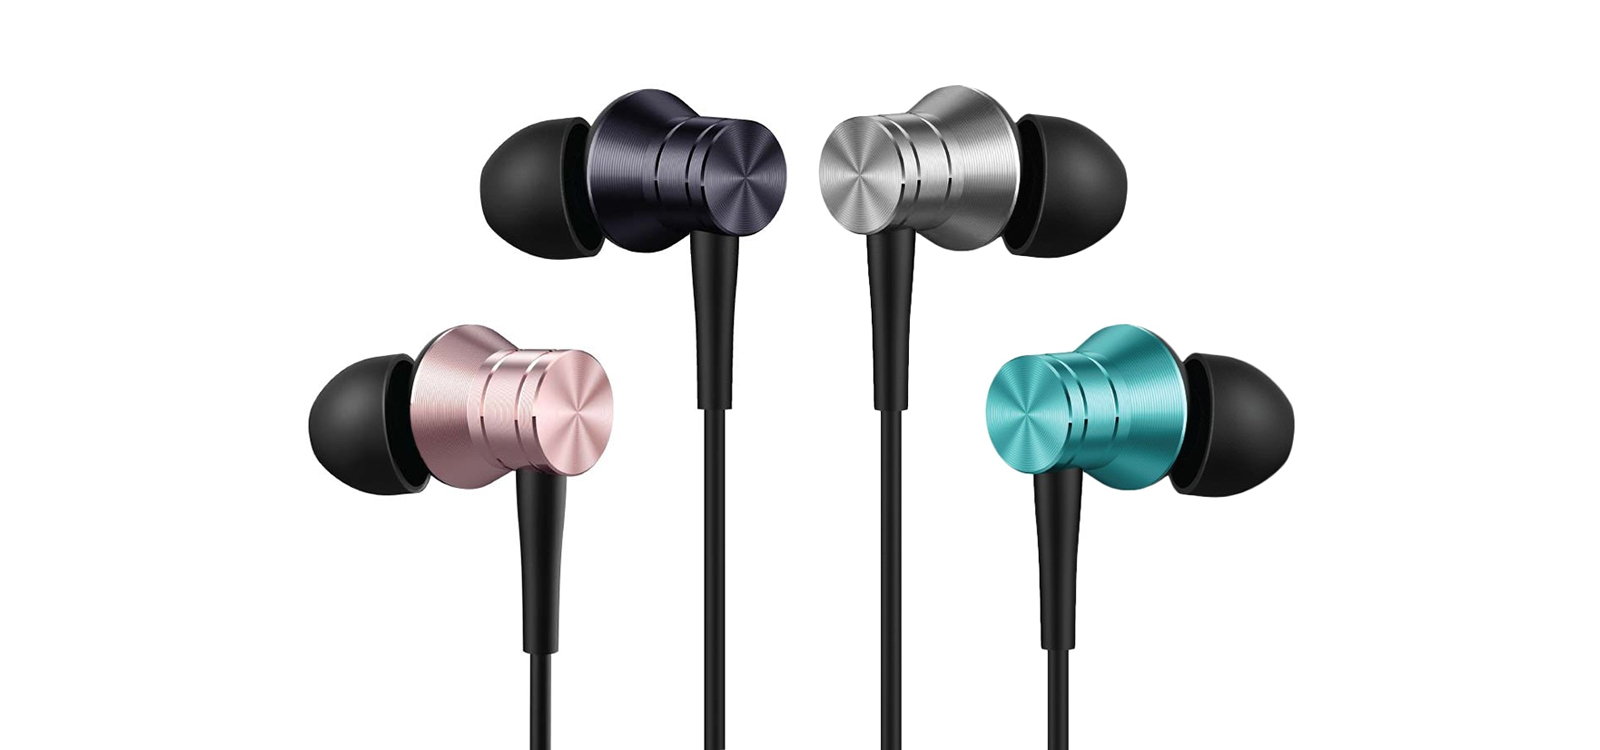 thumb картинка Наушники 1MORE Piston Fit In-Ear Headphones от магазина Fastoo